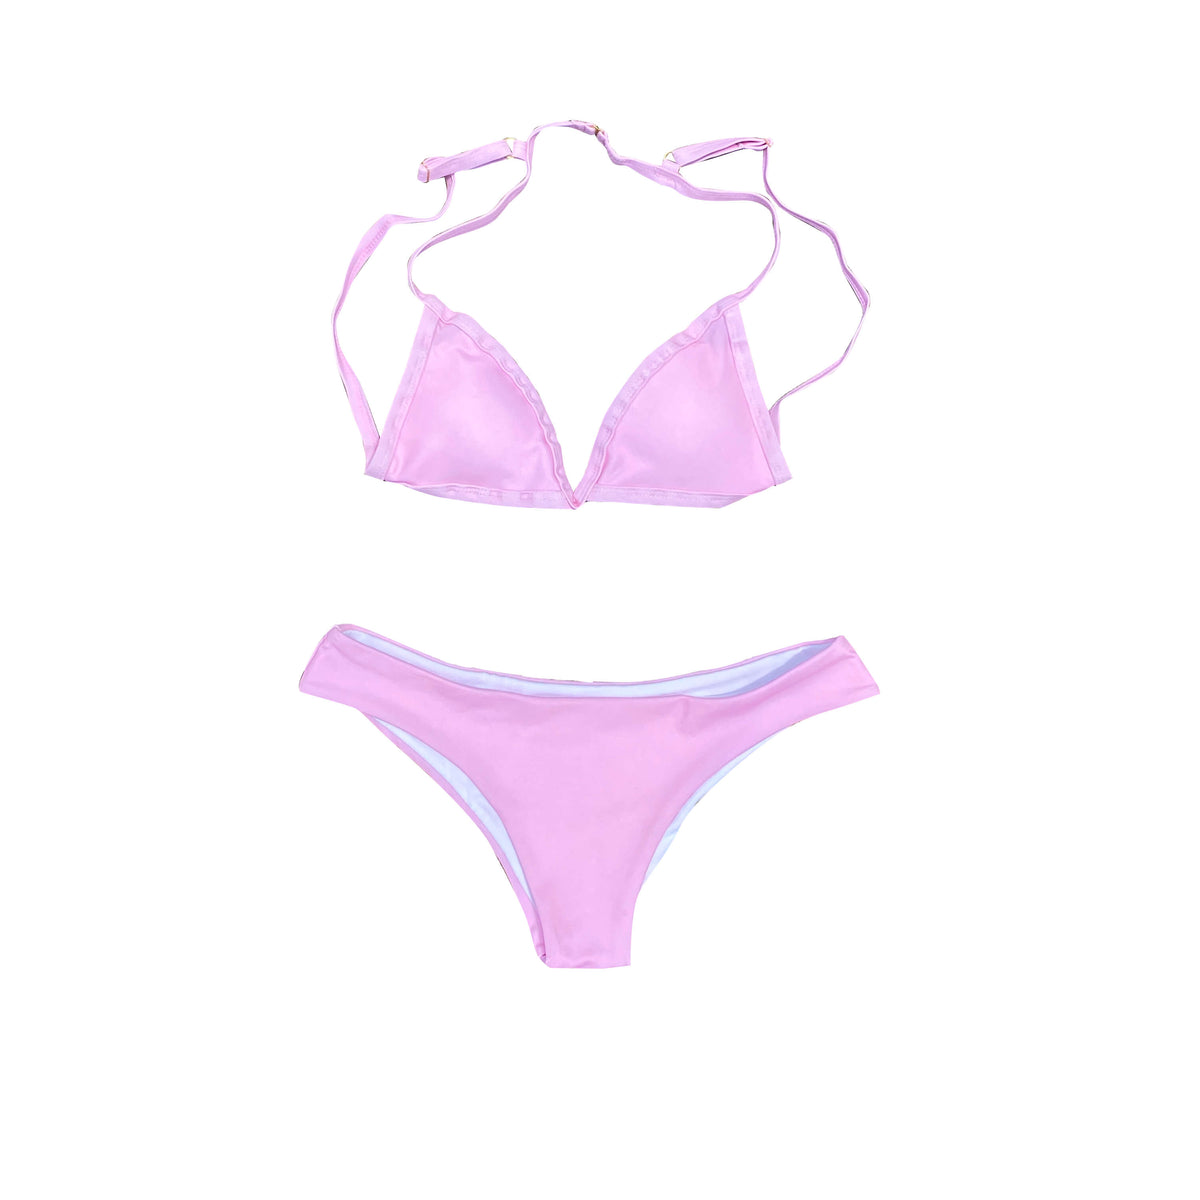 Islandhaze® Color Changing Bikini -Purple To Pink